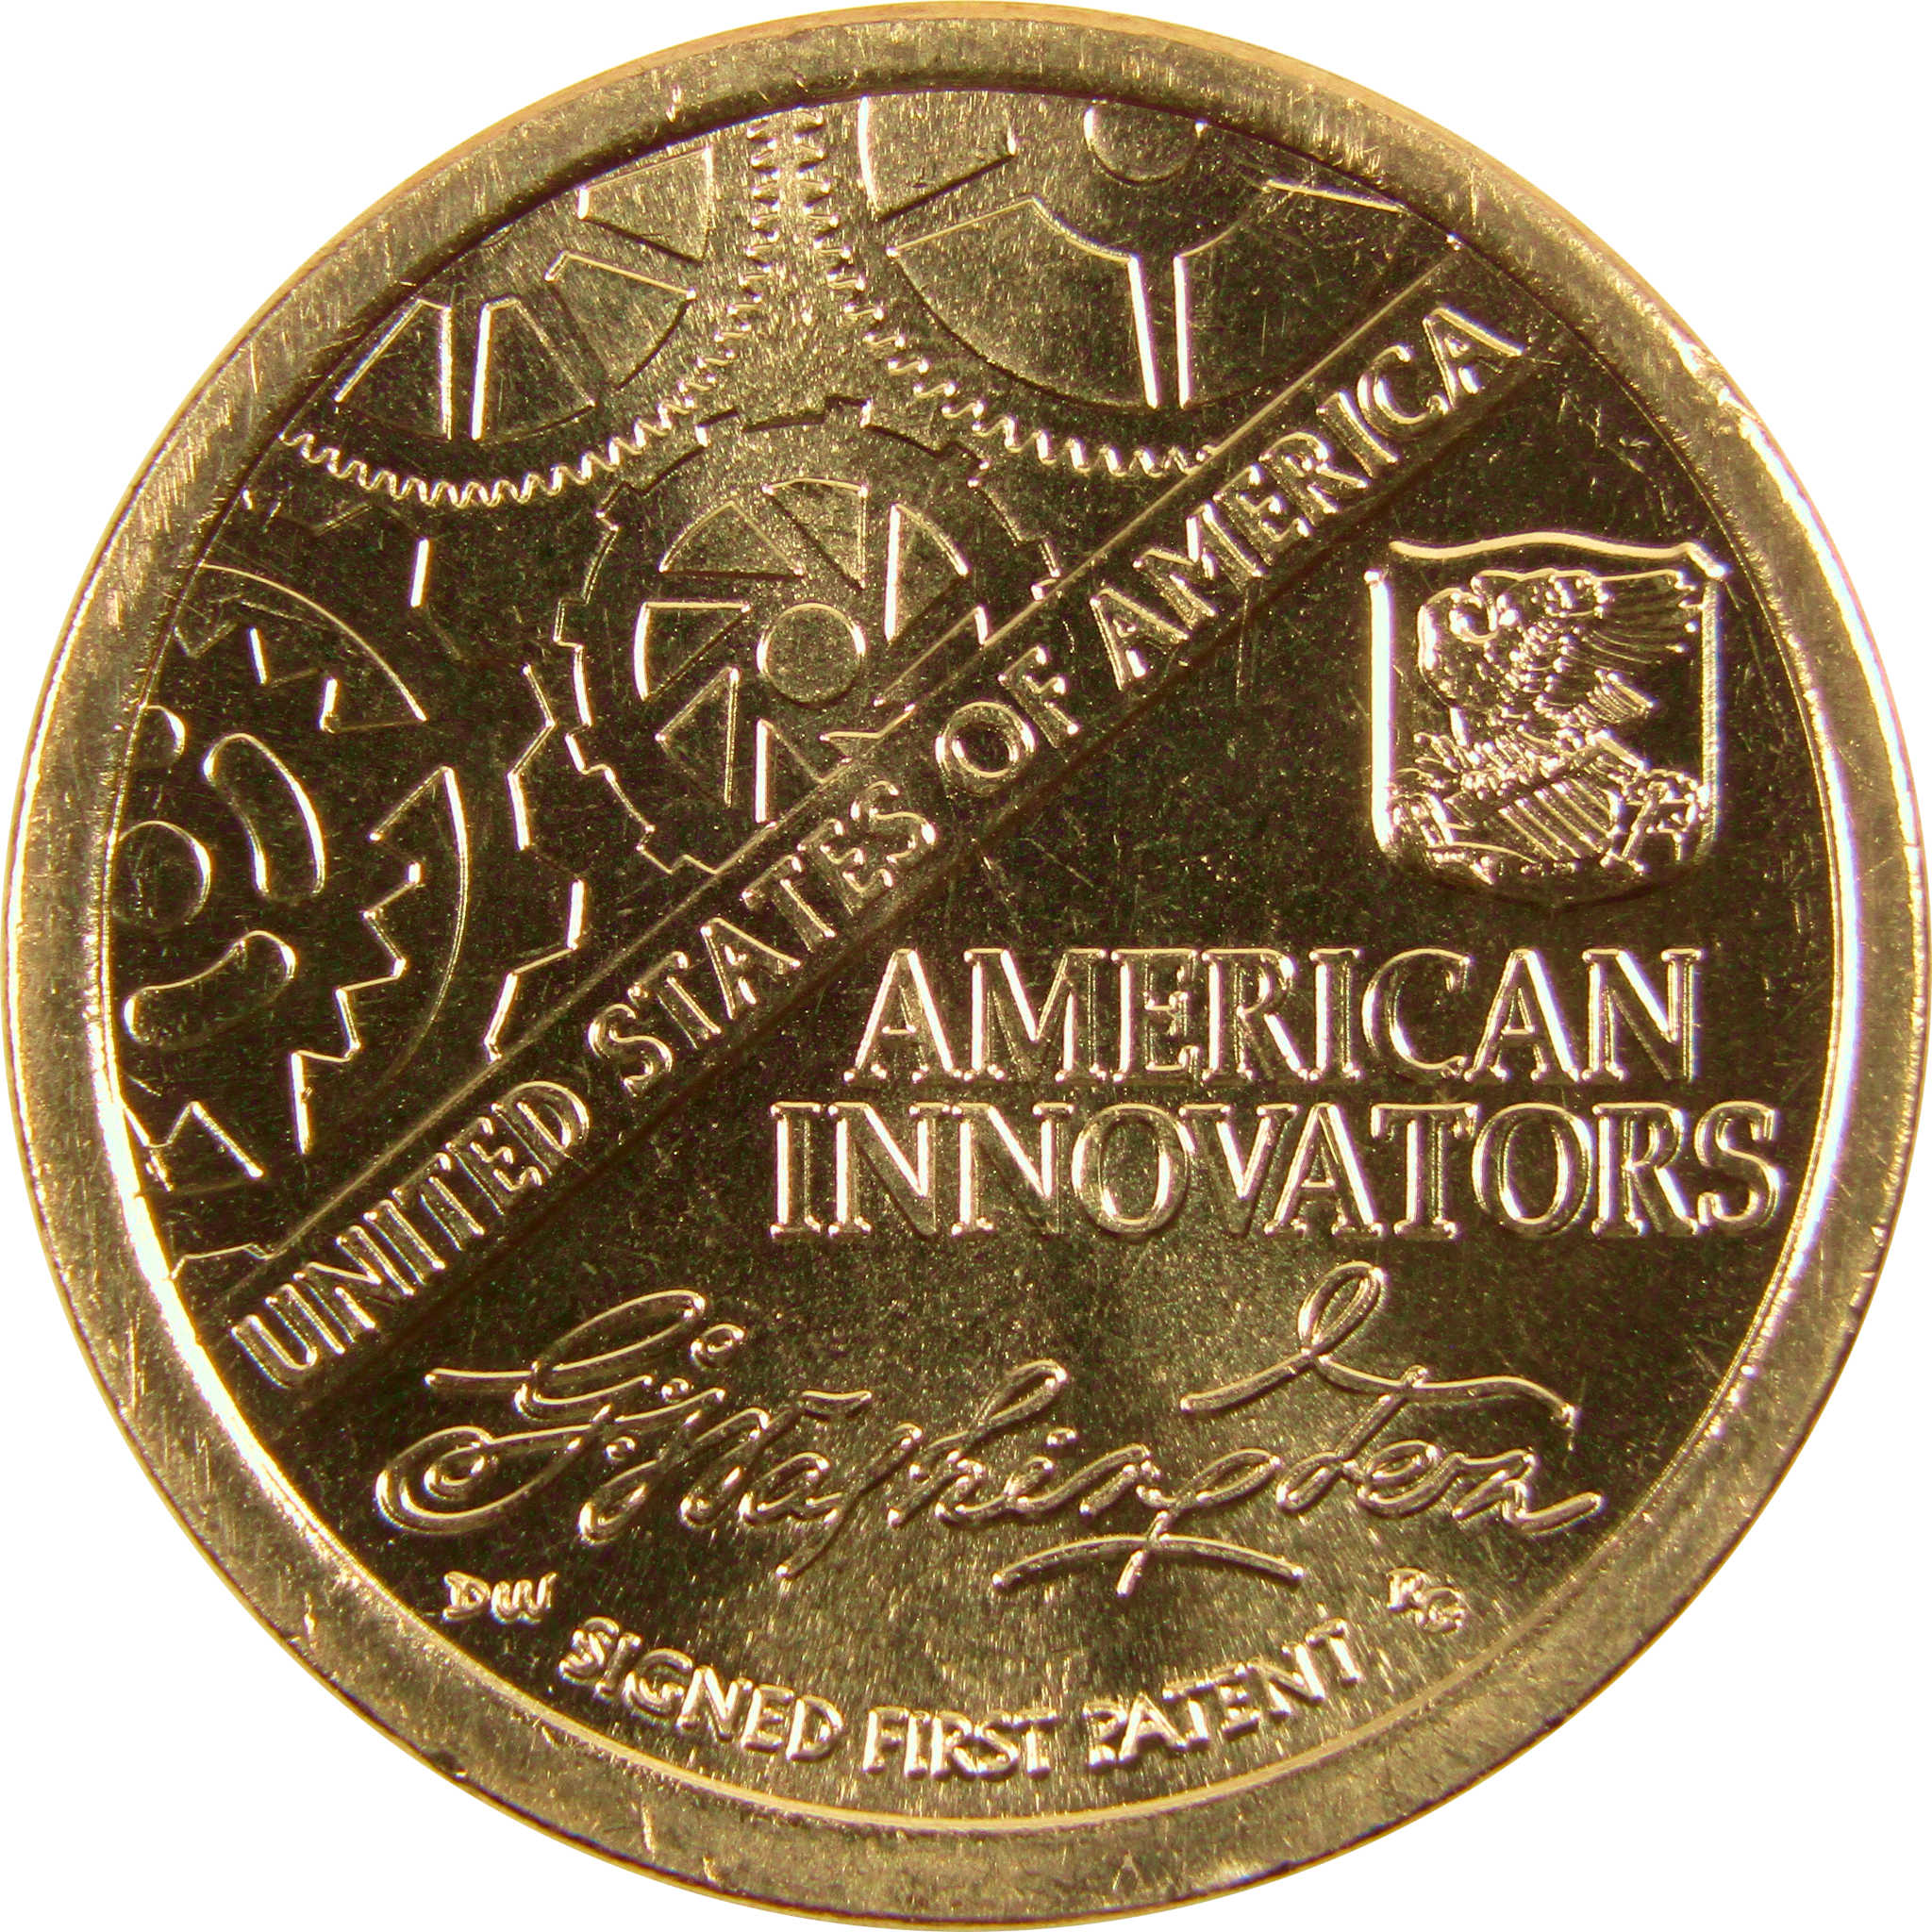 2018 D American Innovation Dollar BU Uncirculated $1 Coin